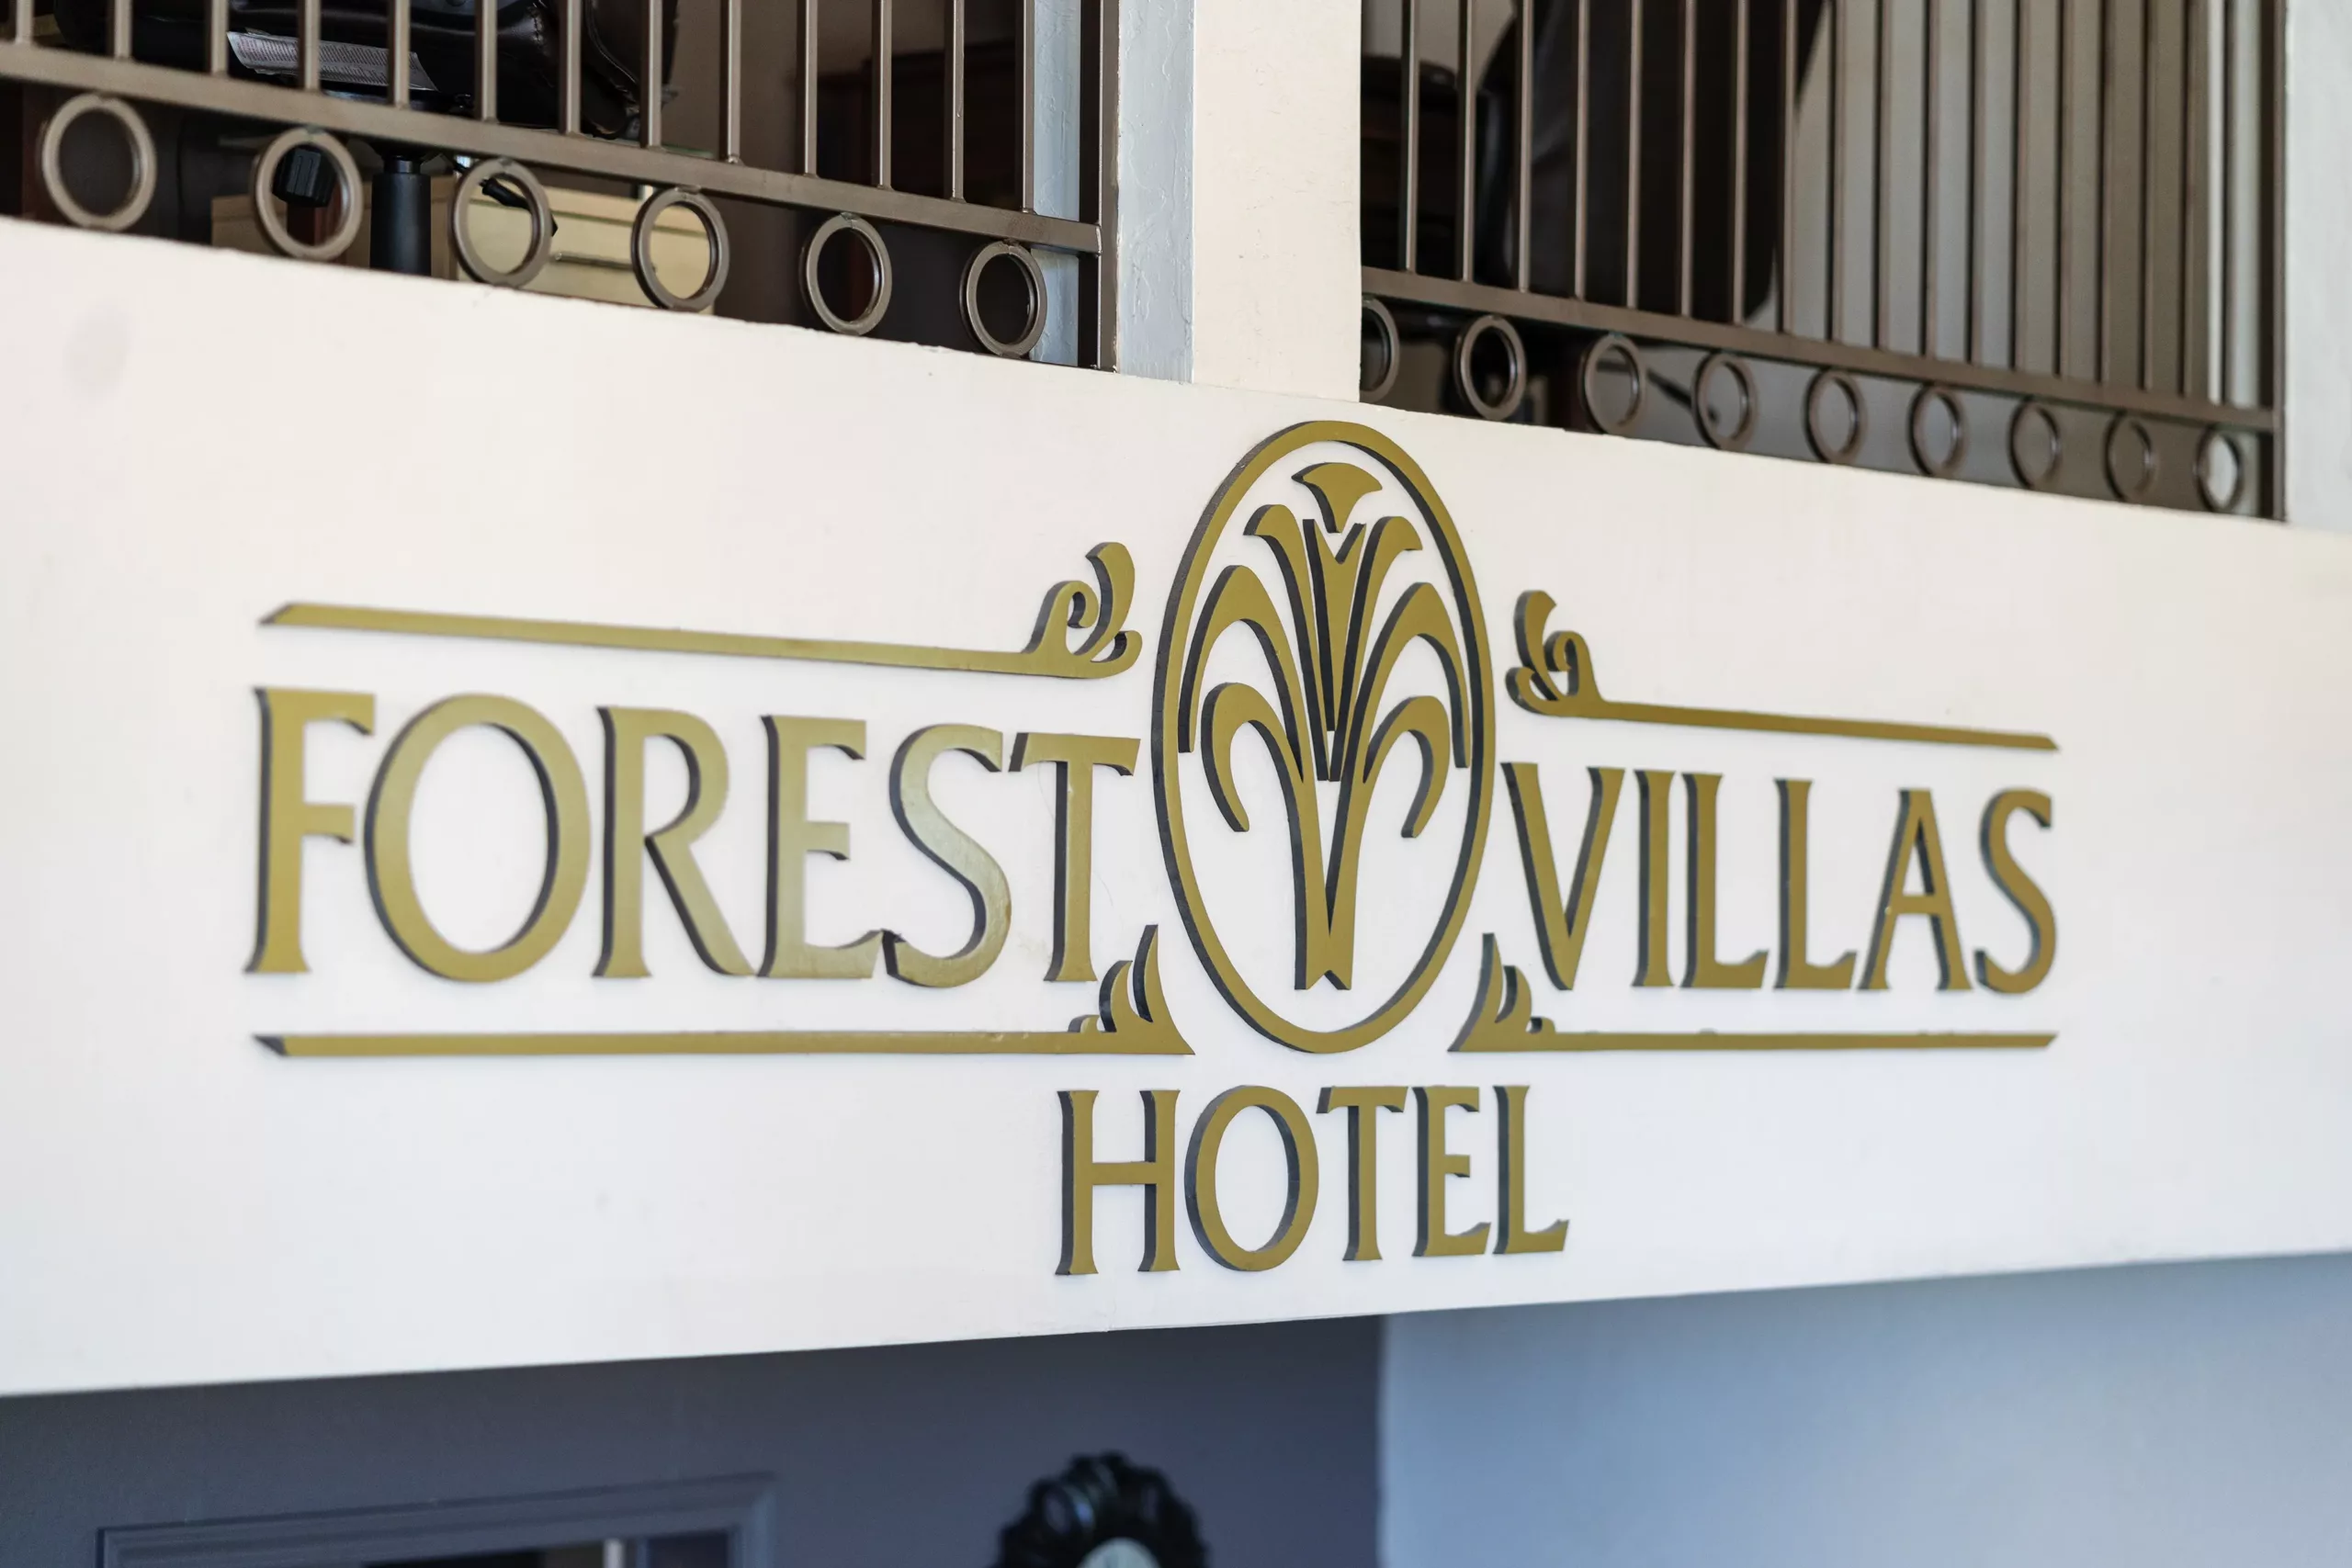 Forest Villas Hotel in Prescott